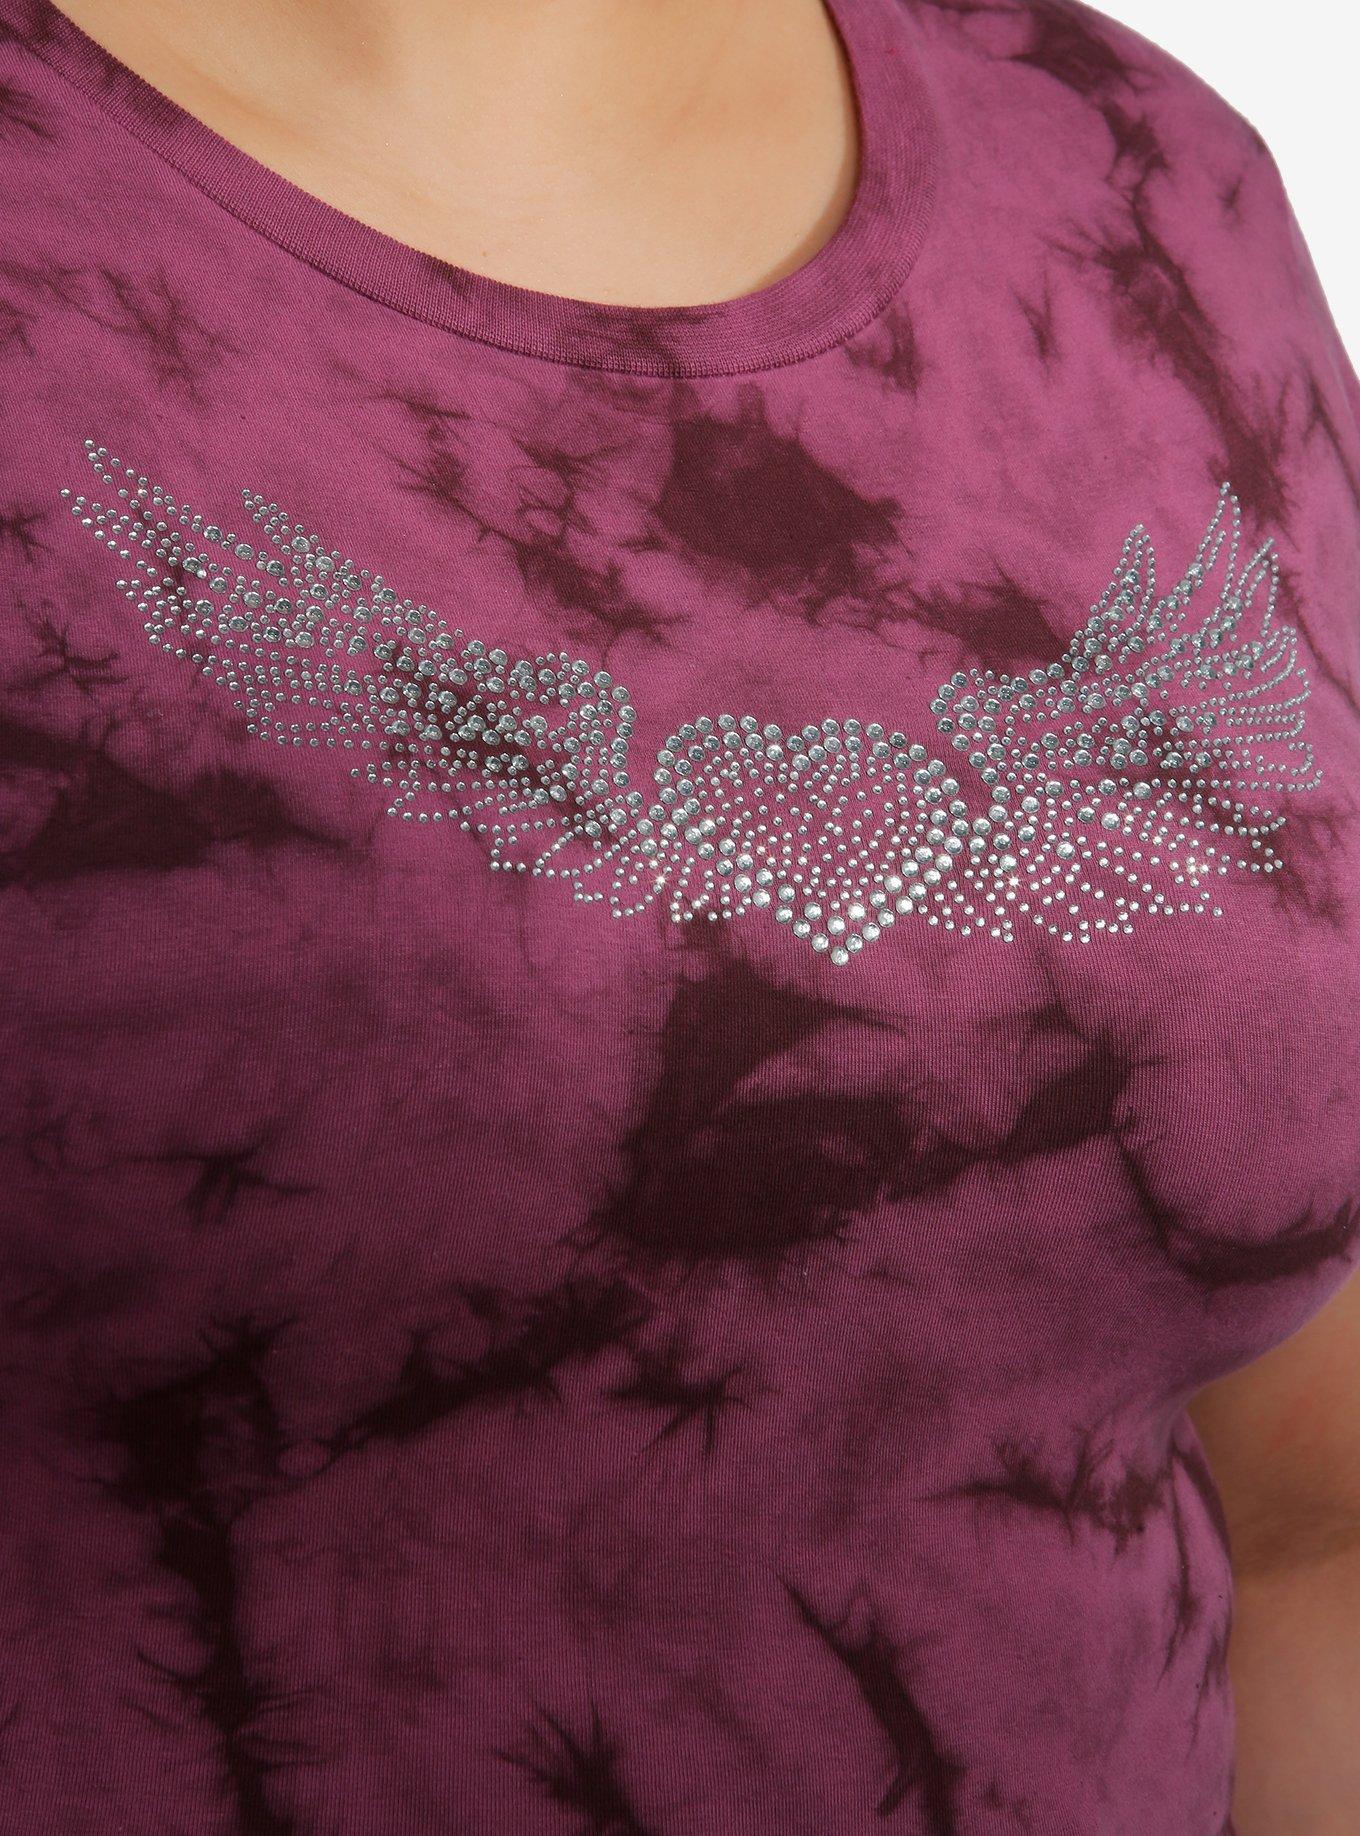 Winged Heart Rhinestone Pink Tie-Dye Girls Baby T-Shirt Plus Size, PINK, alternate